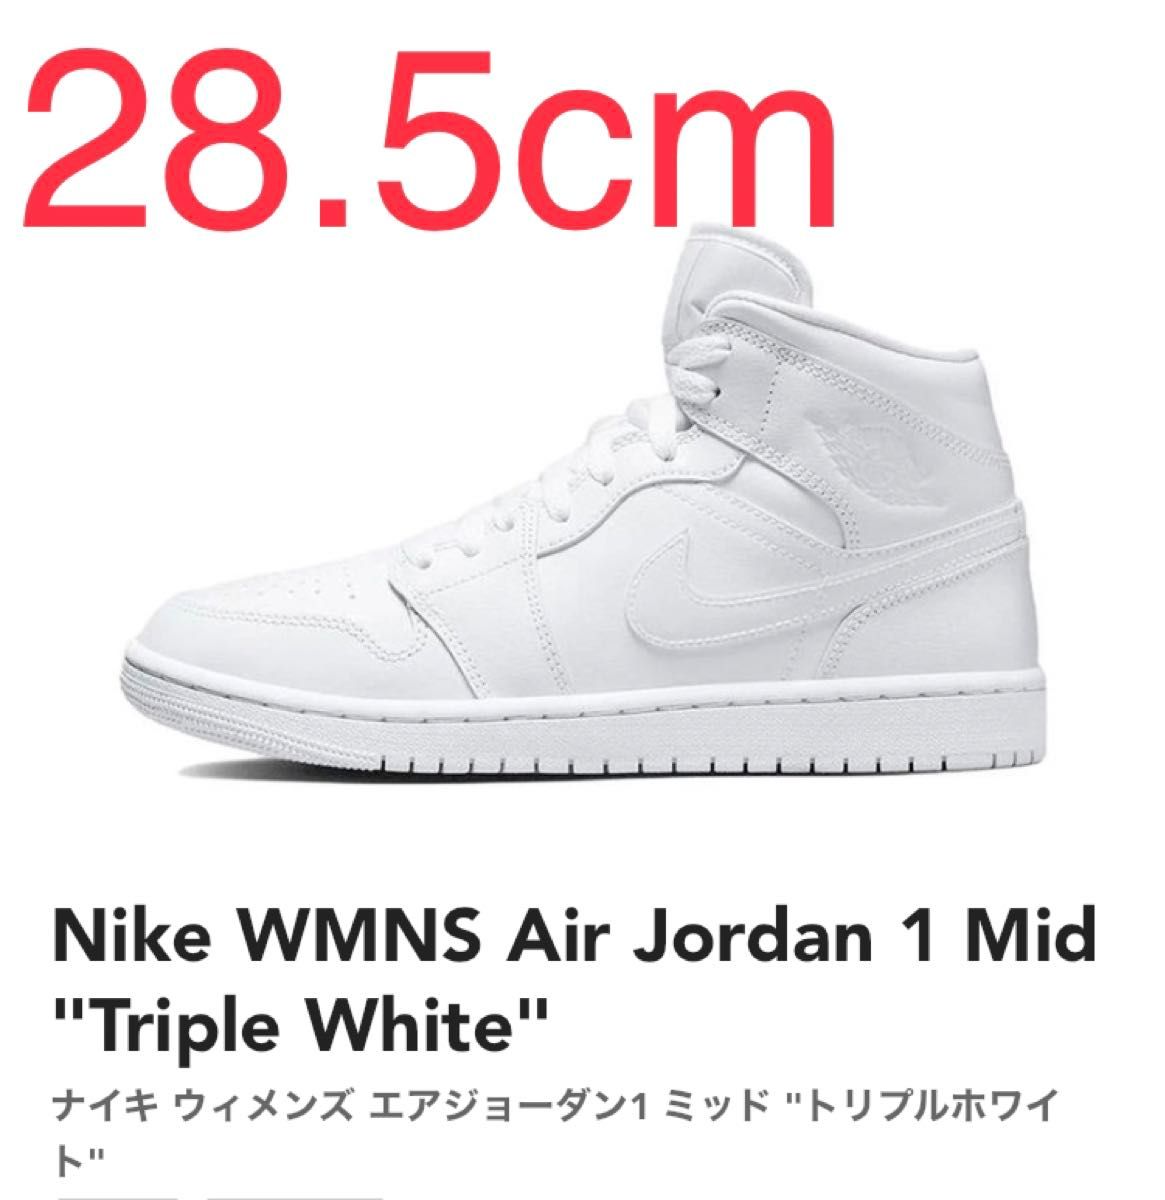 Nike WMNS Air Jordan 1 Mid "Triple White 28.5